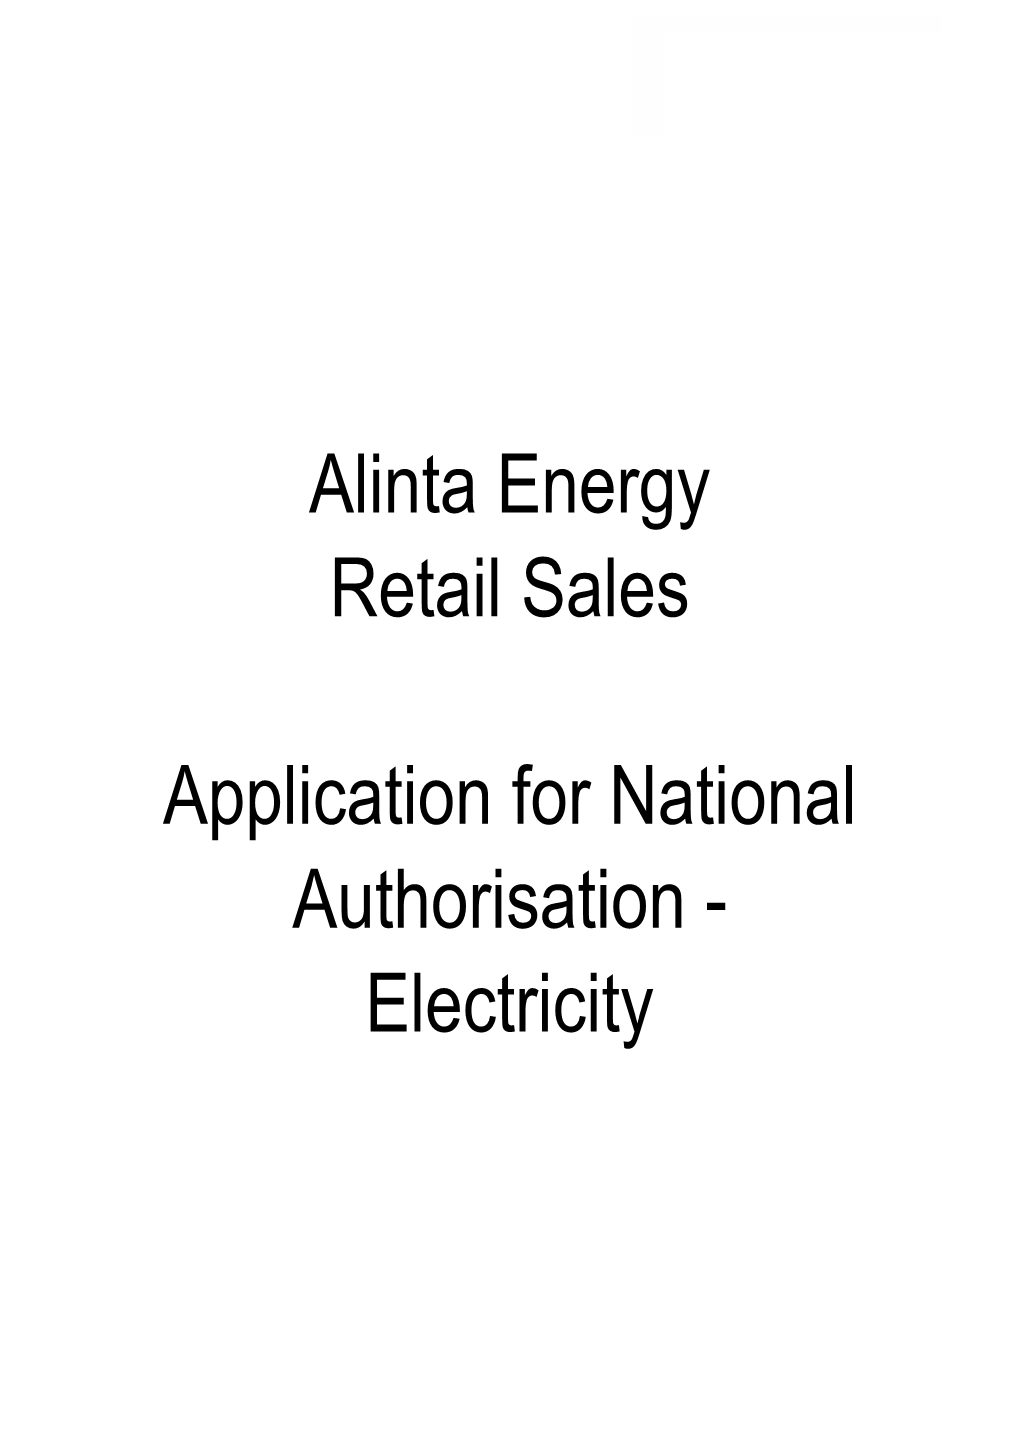 Alinta Energy Retail Sales Application For